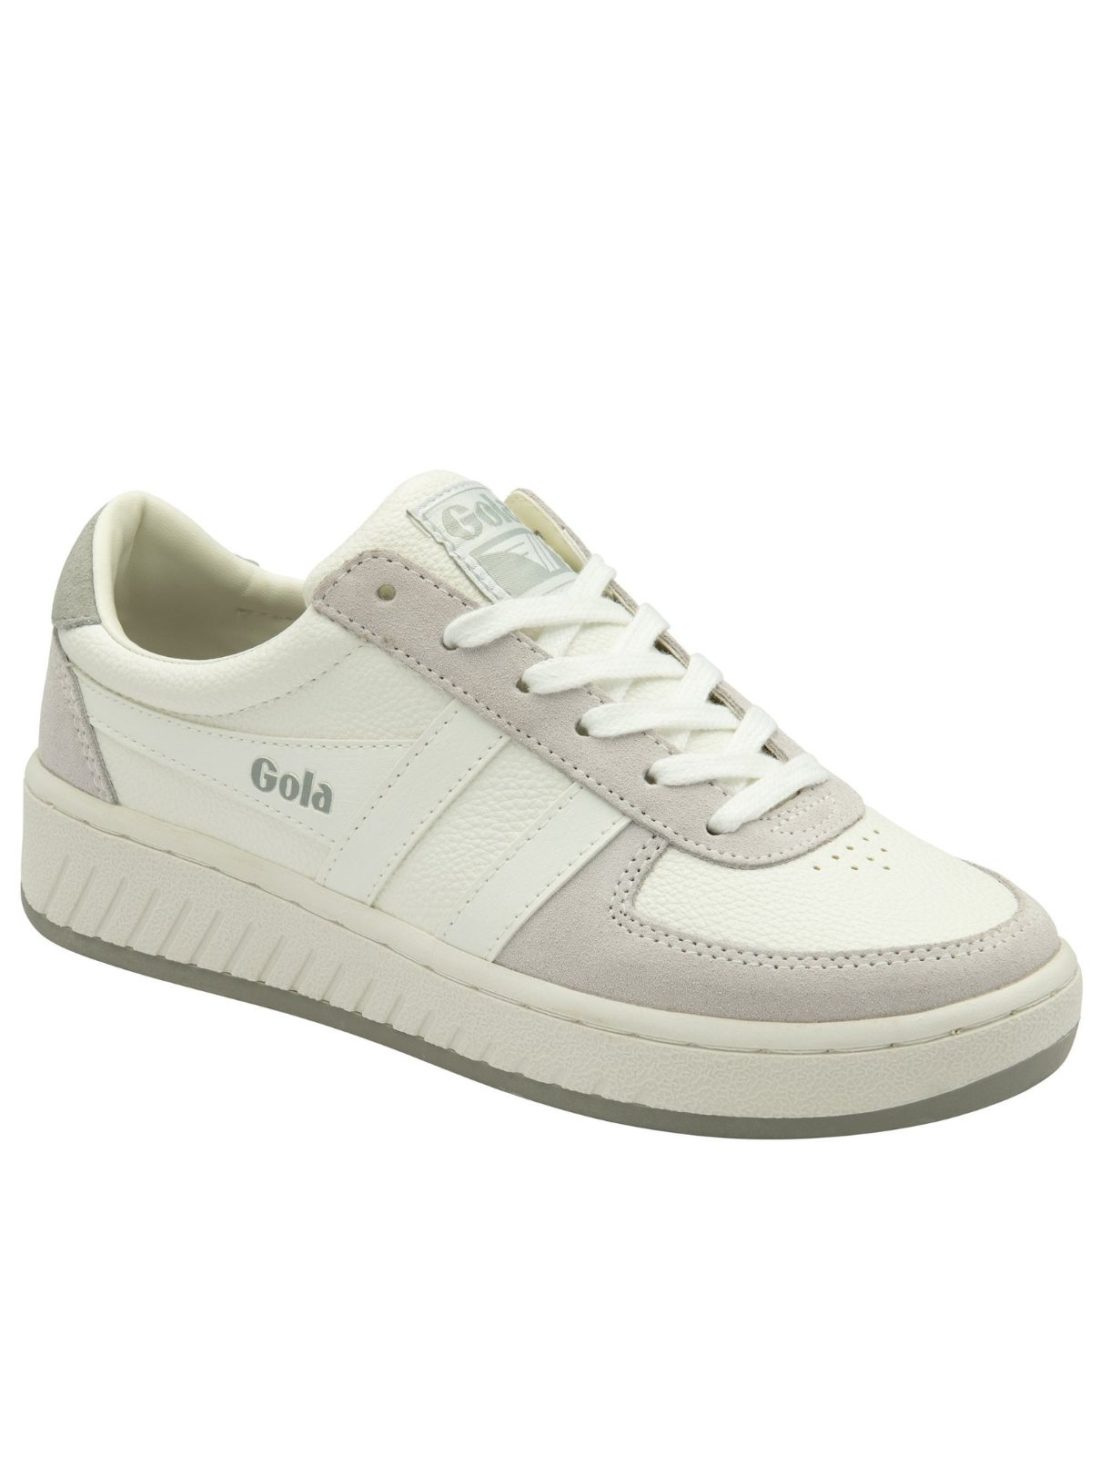 gola grandslam 88 sneaker in white/lt grey